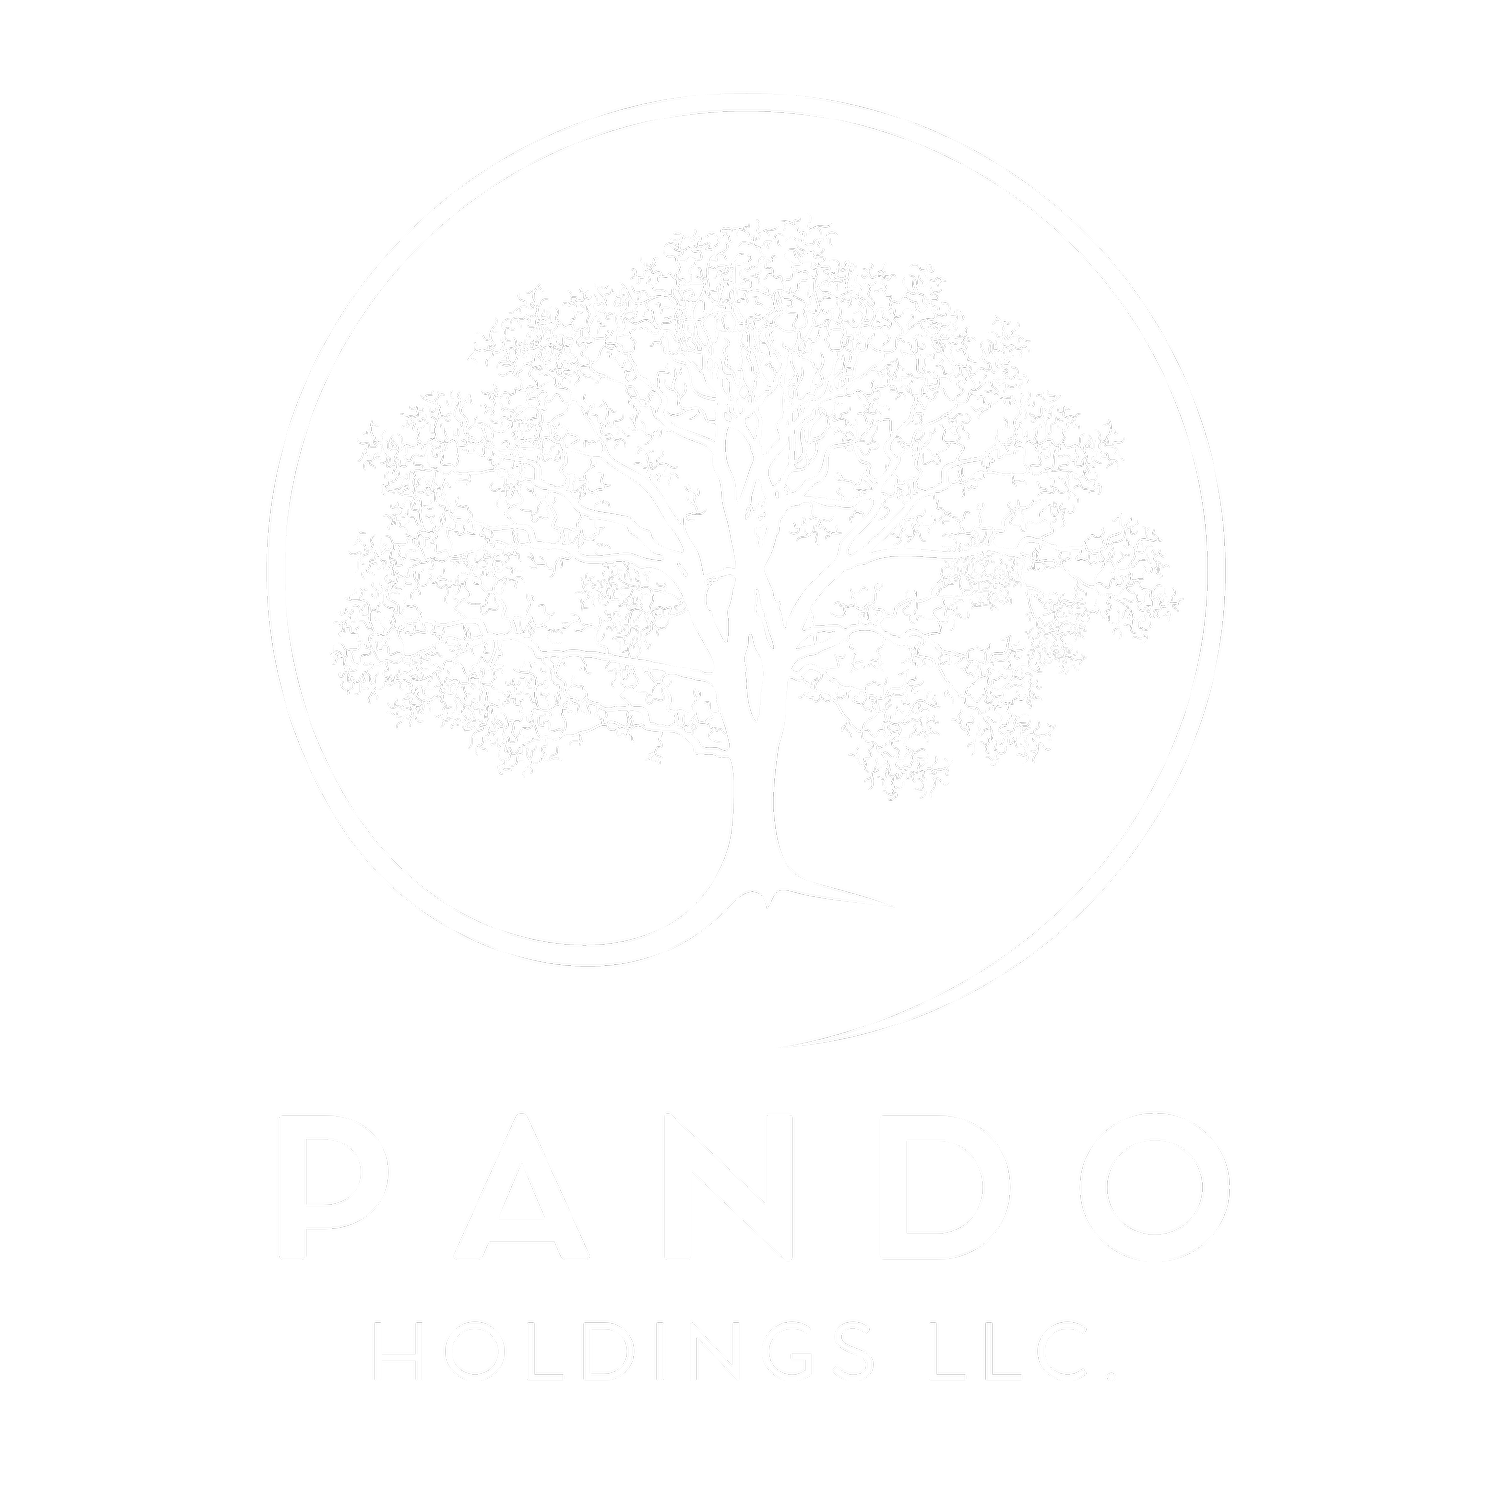 Pando Holdings LLC